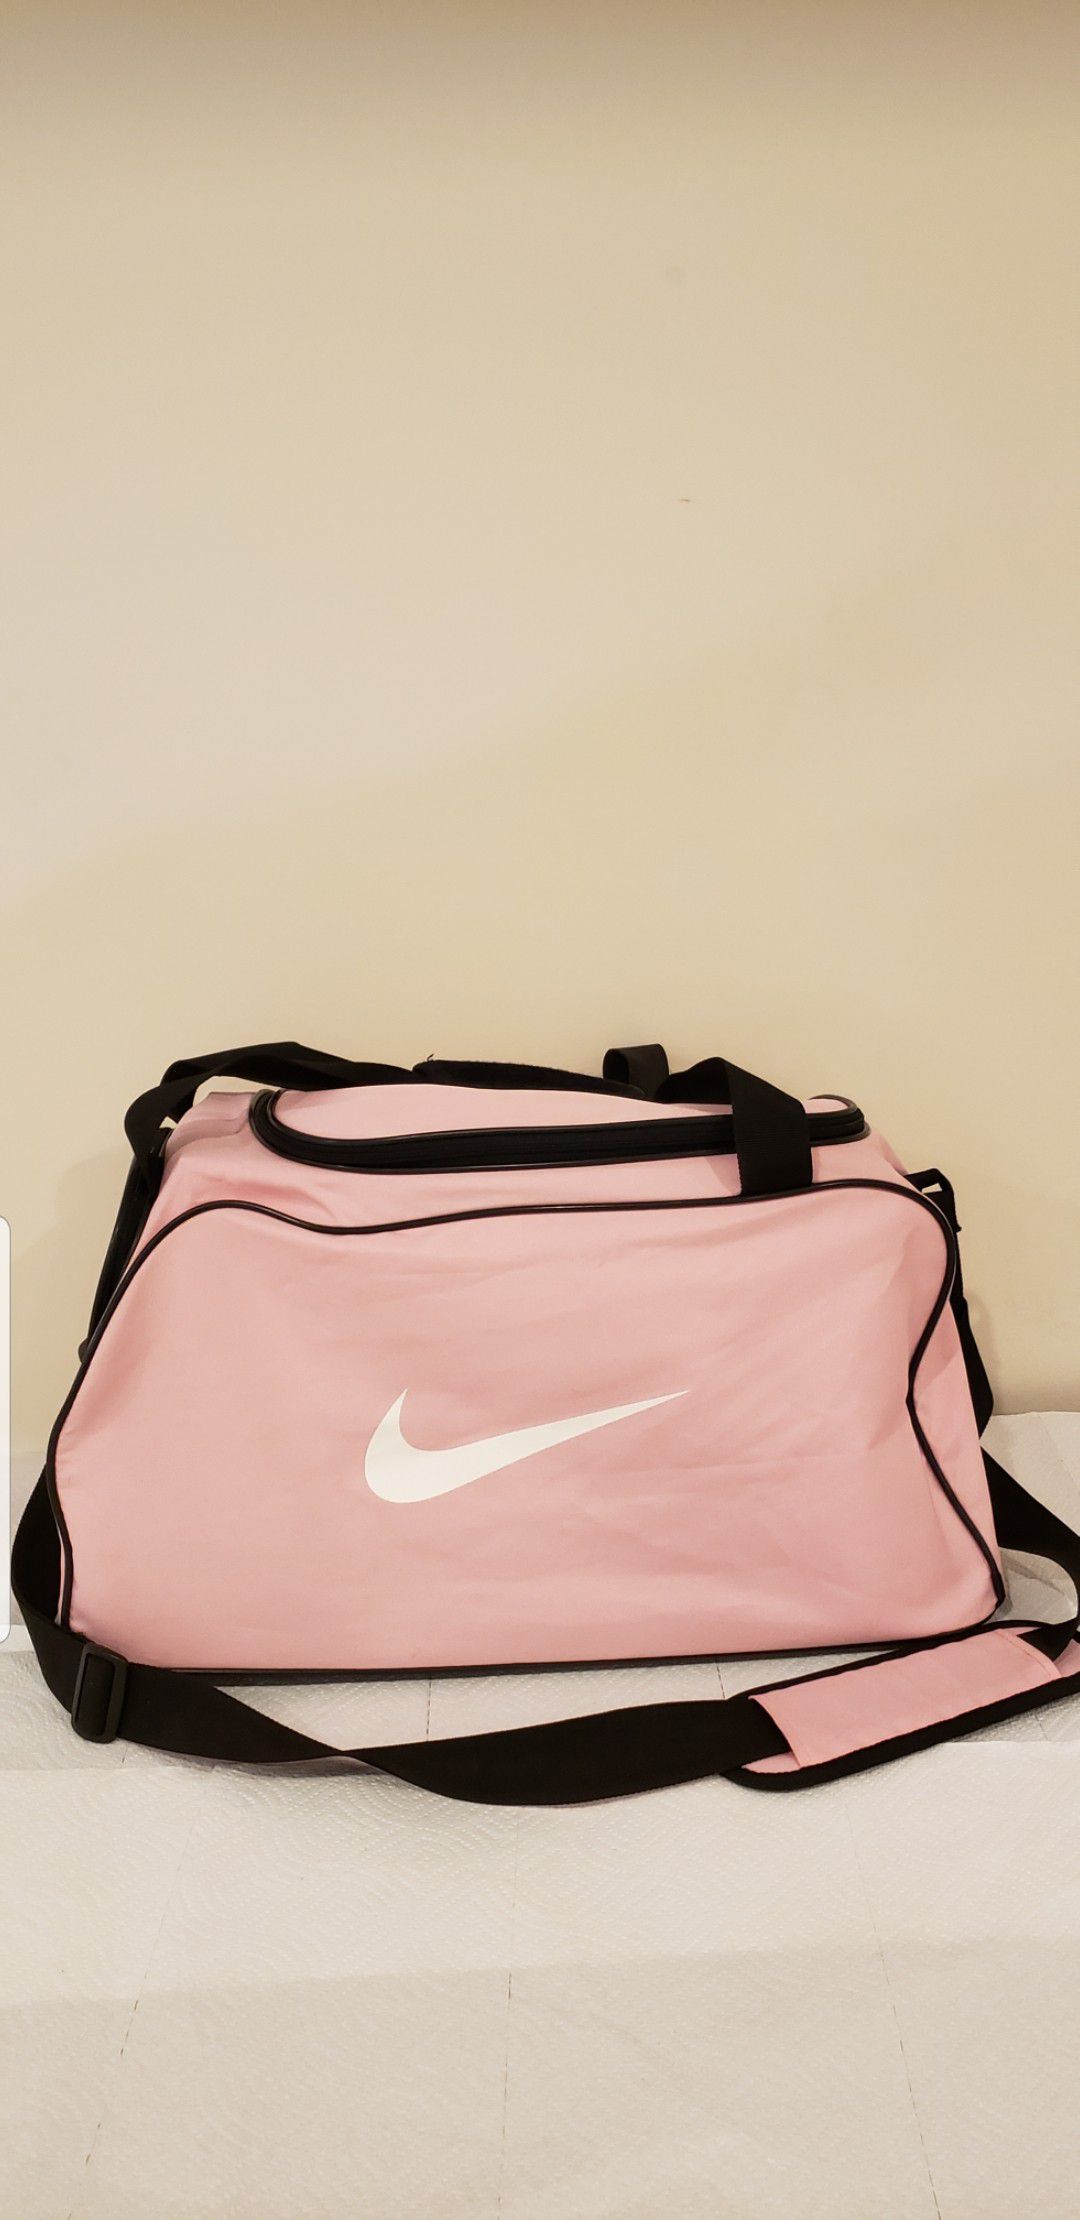 Nike sport bag